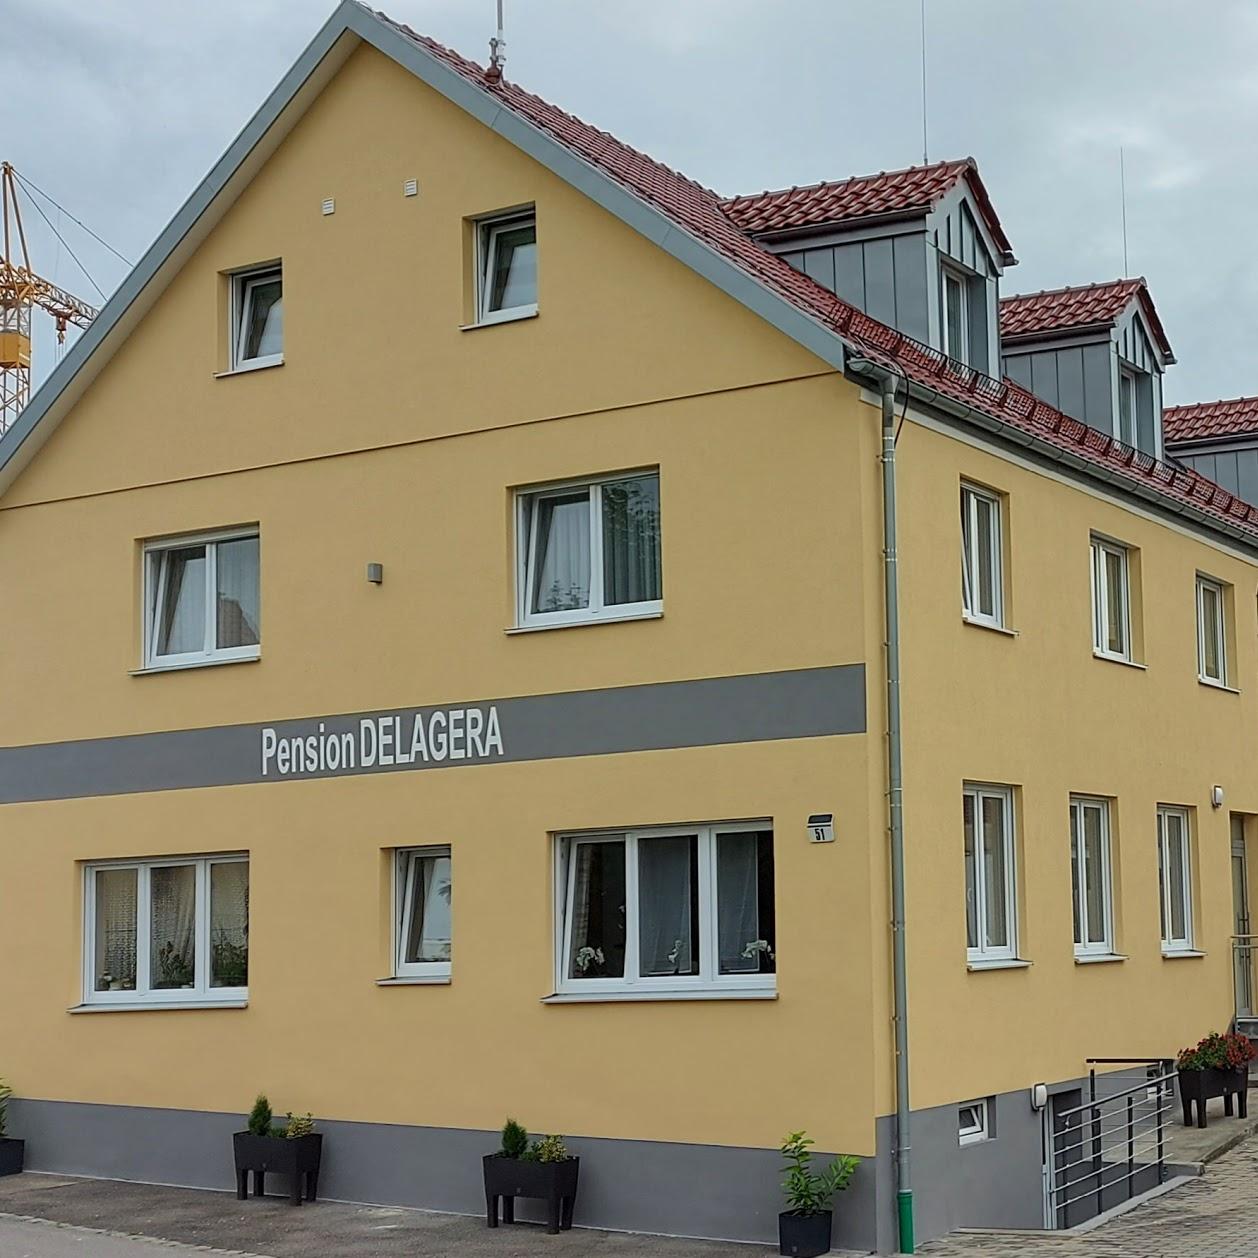 Restaurant "Pension DELAGERA" in Großmehring